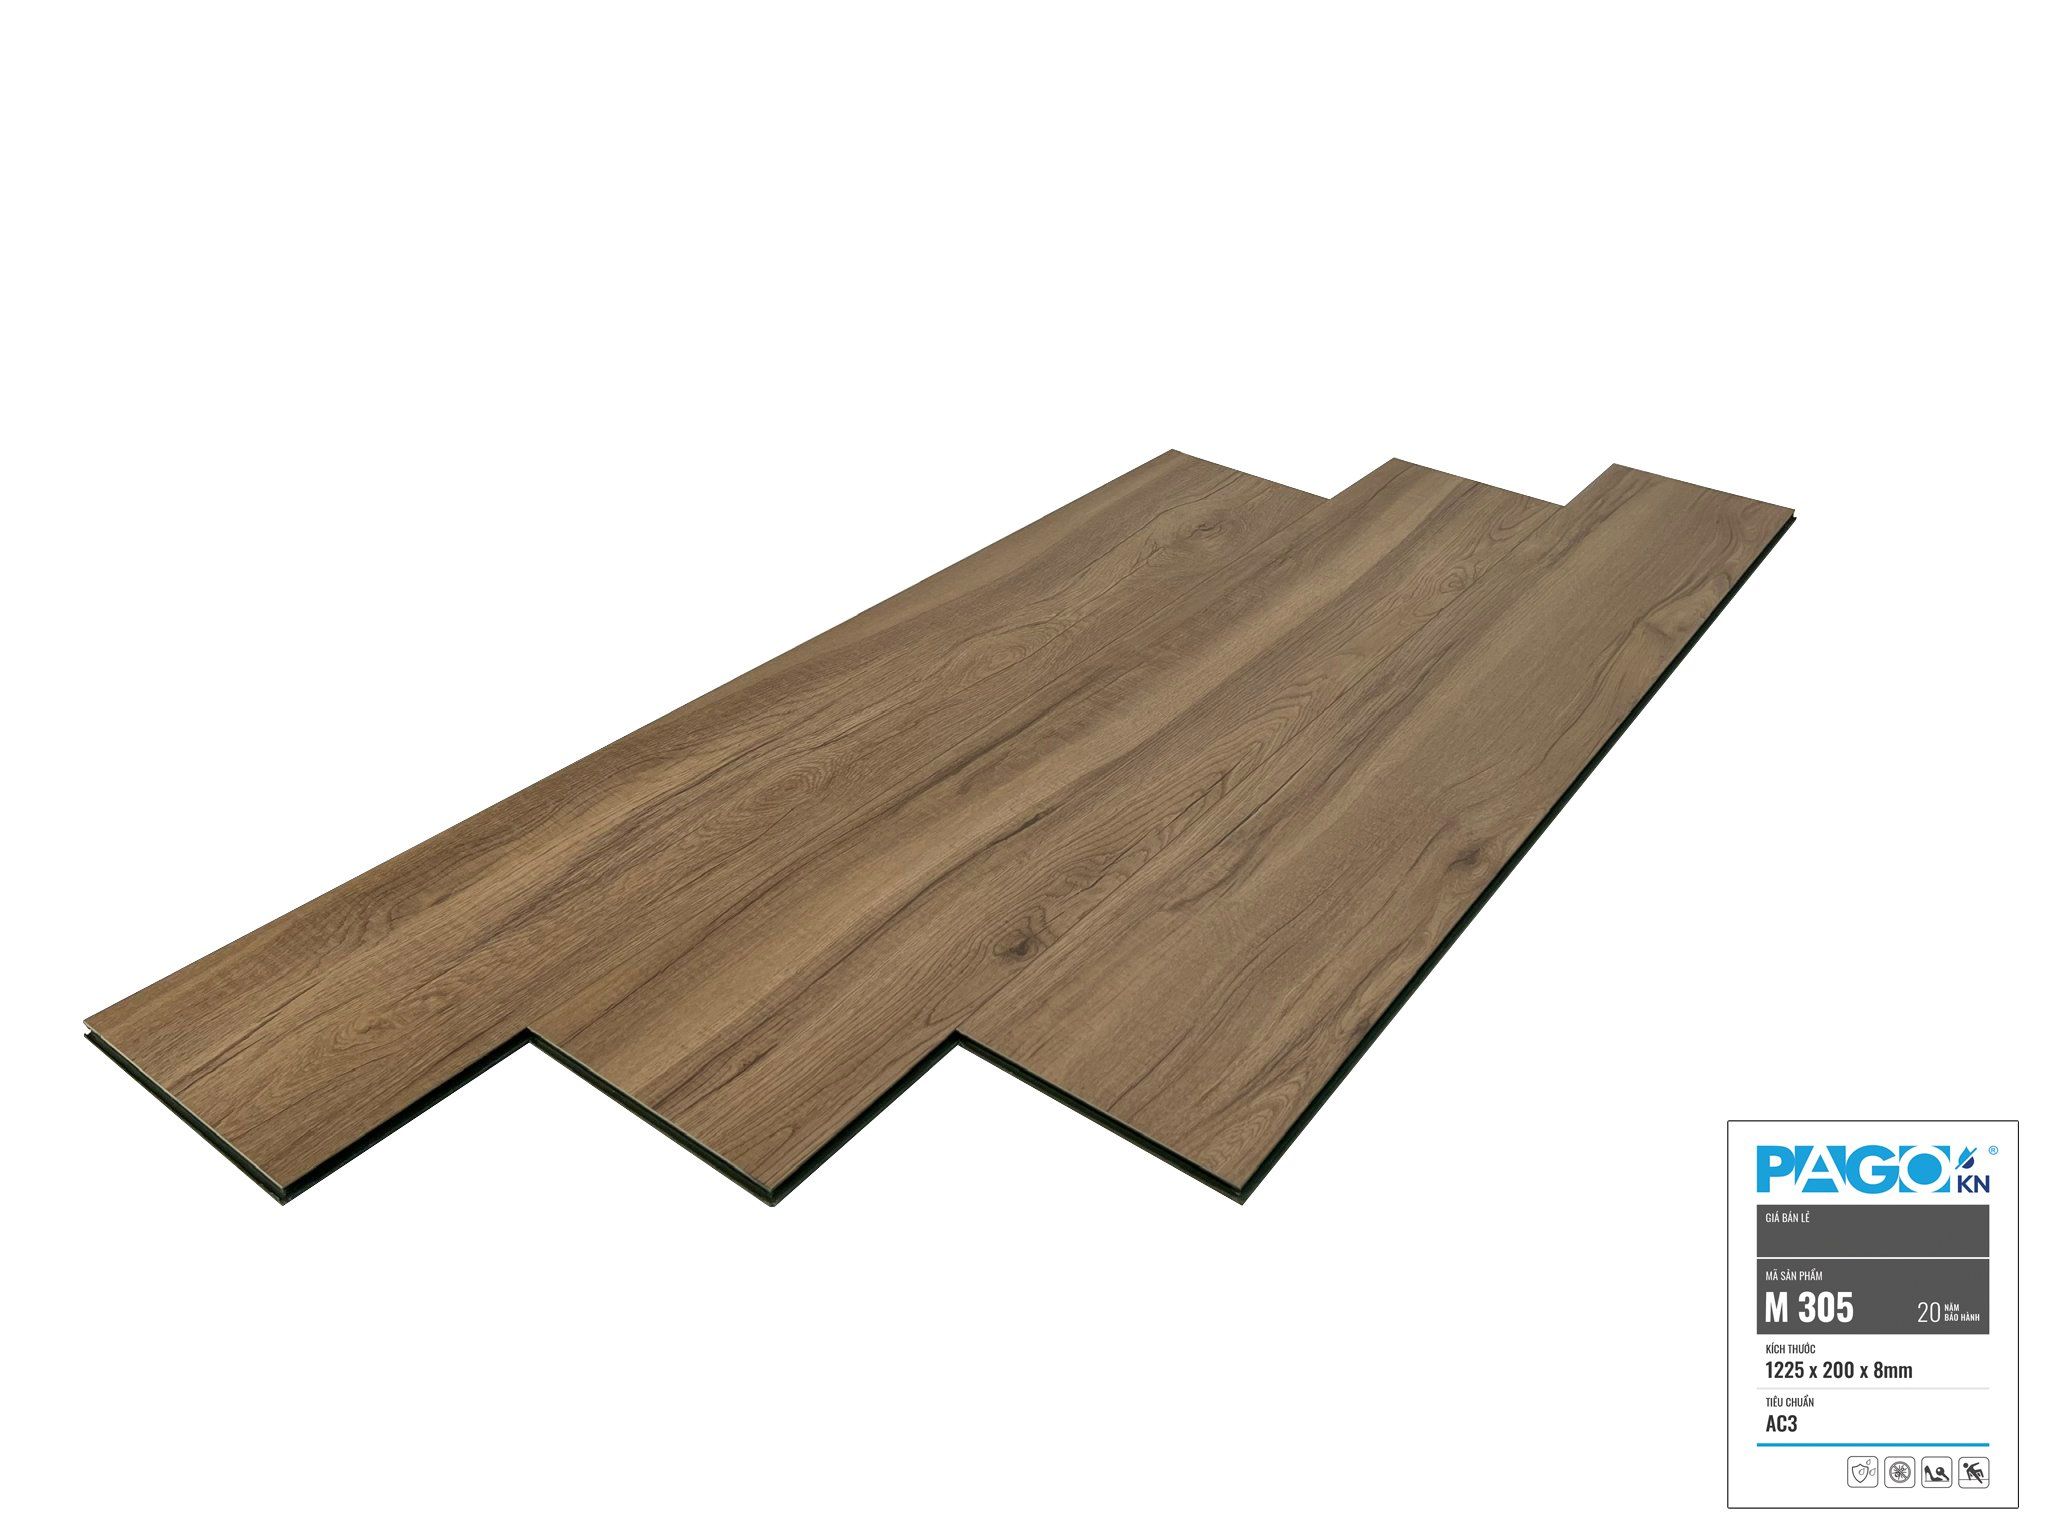  Sàn gỗ Pago – M305 